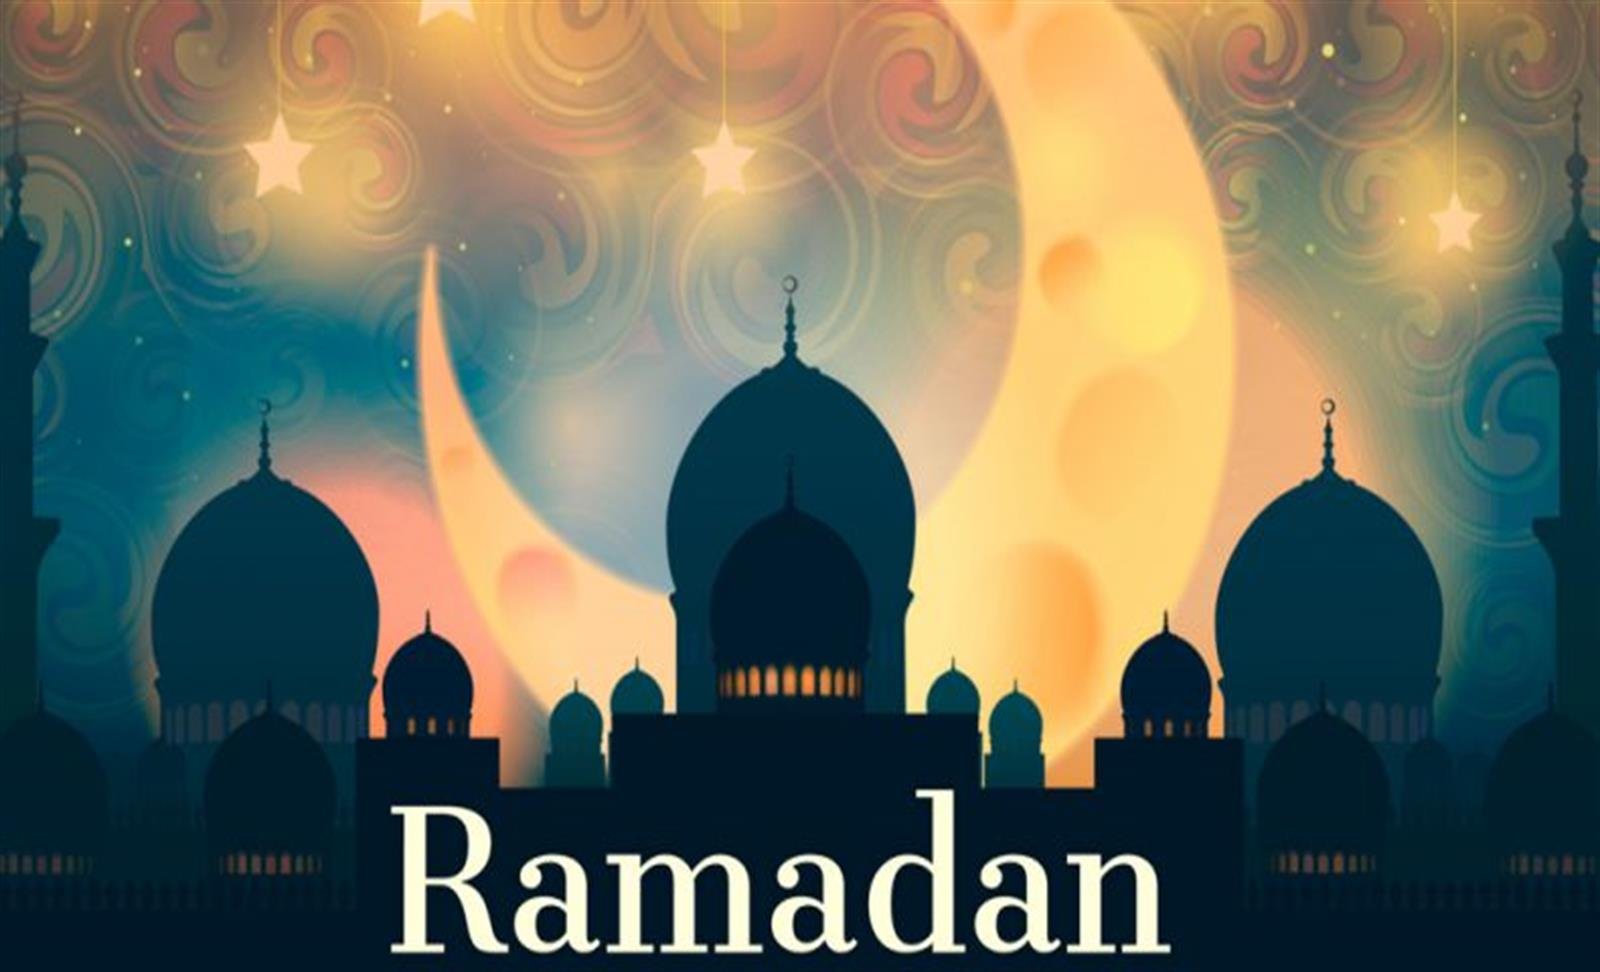 Рисунки на месяц Рамадан. Рамадан картинки. Рамадан фон для баннера. Картинки Рамадан месяц. Первый день рамадана картинки